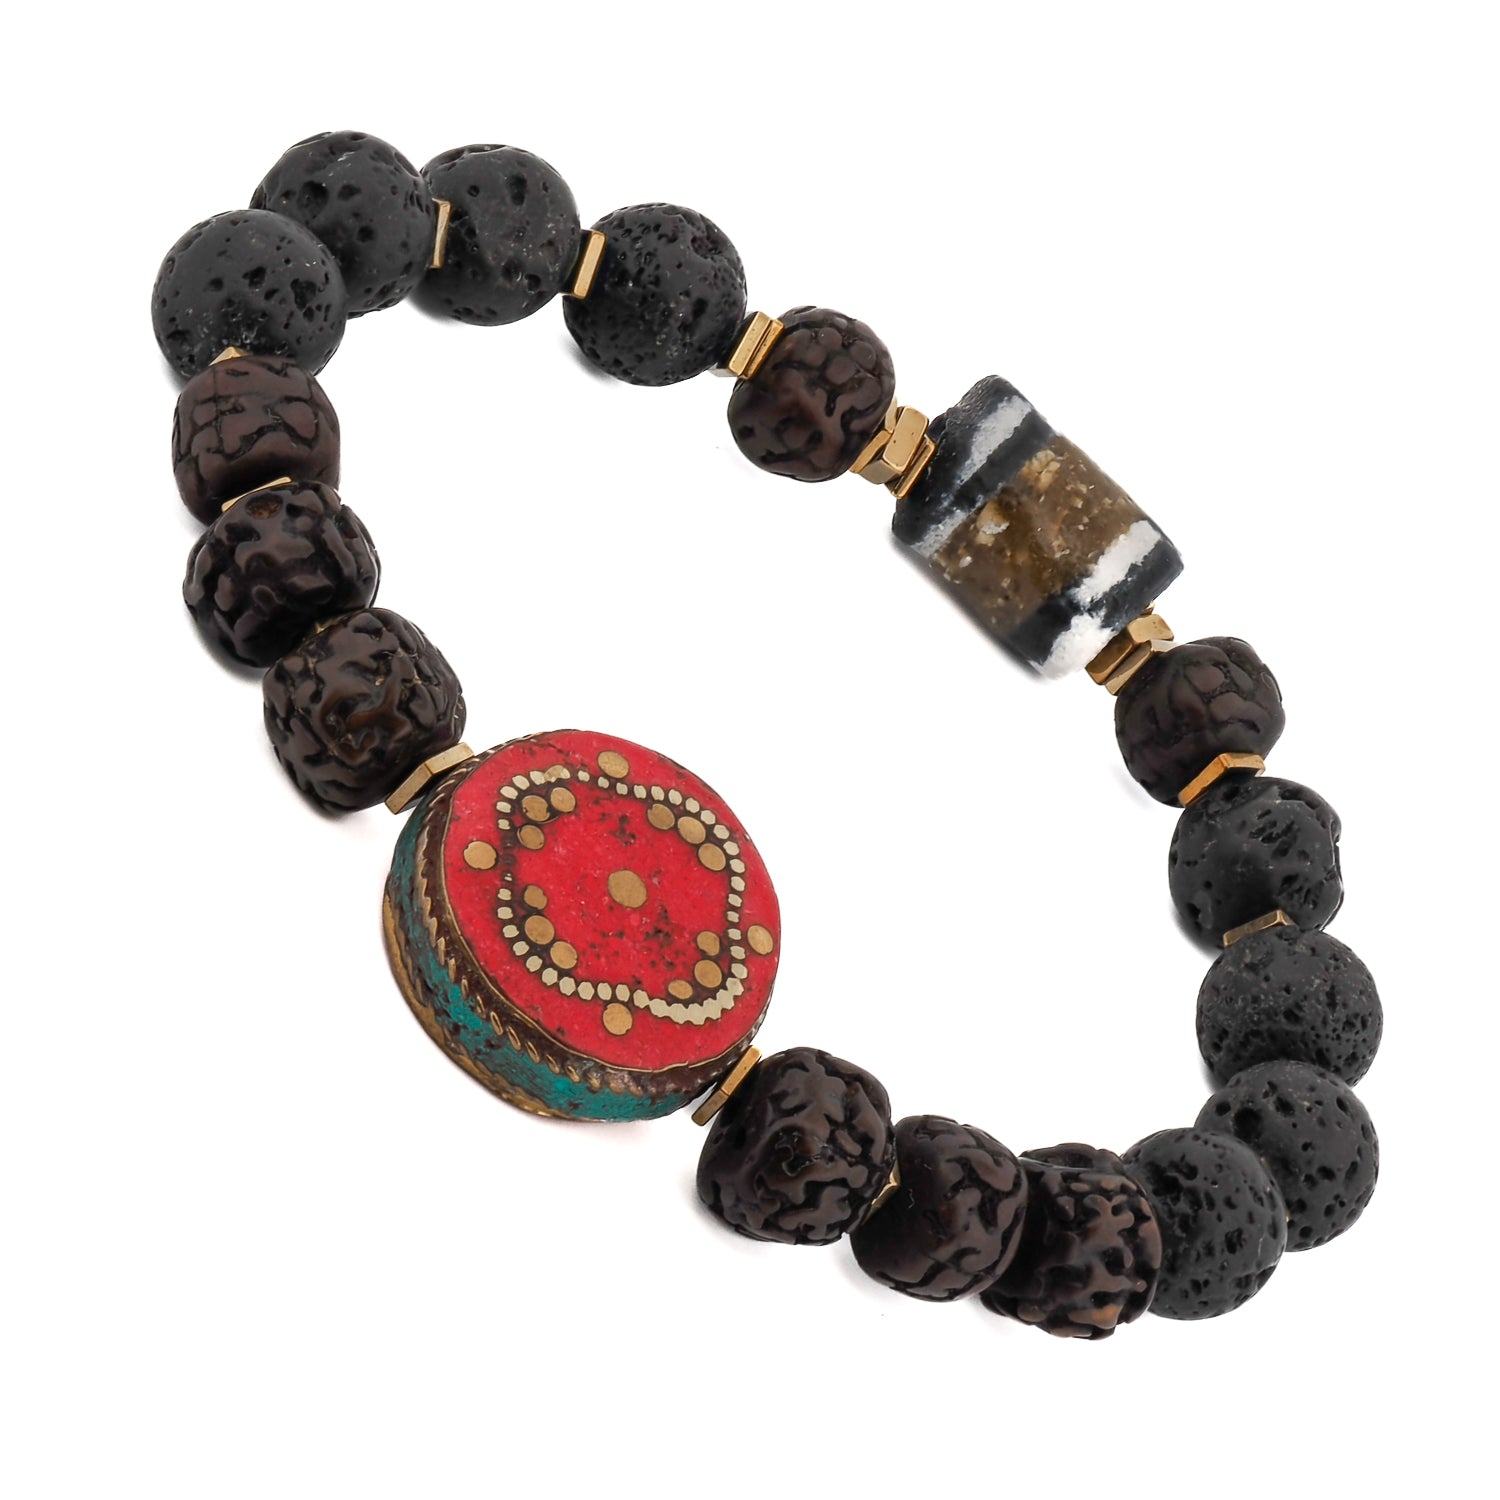 Prayer Seed Beads Meditation Bracelet